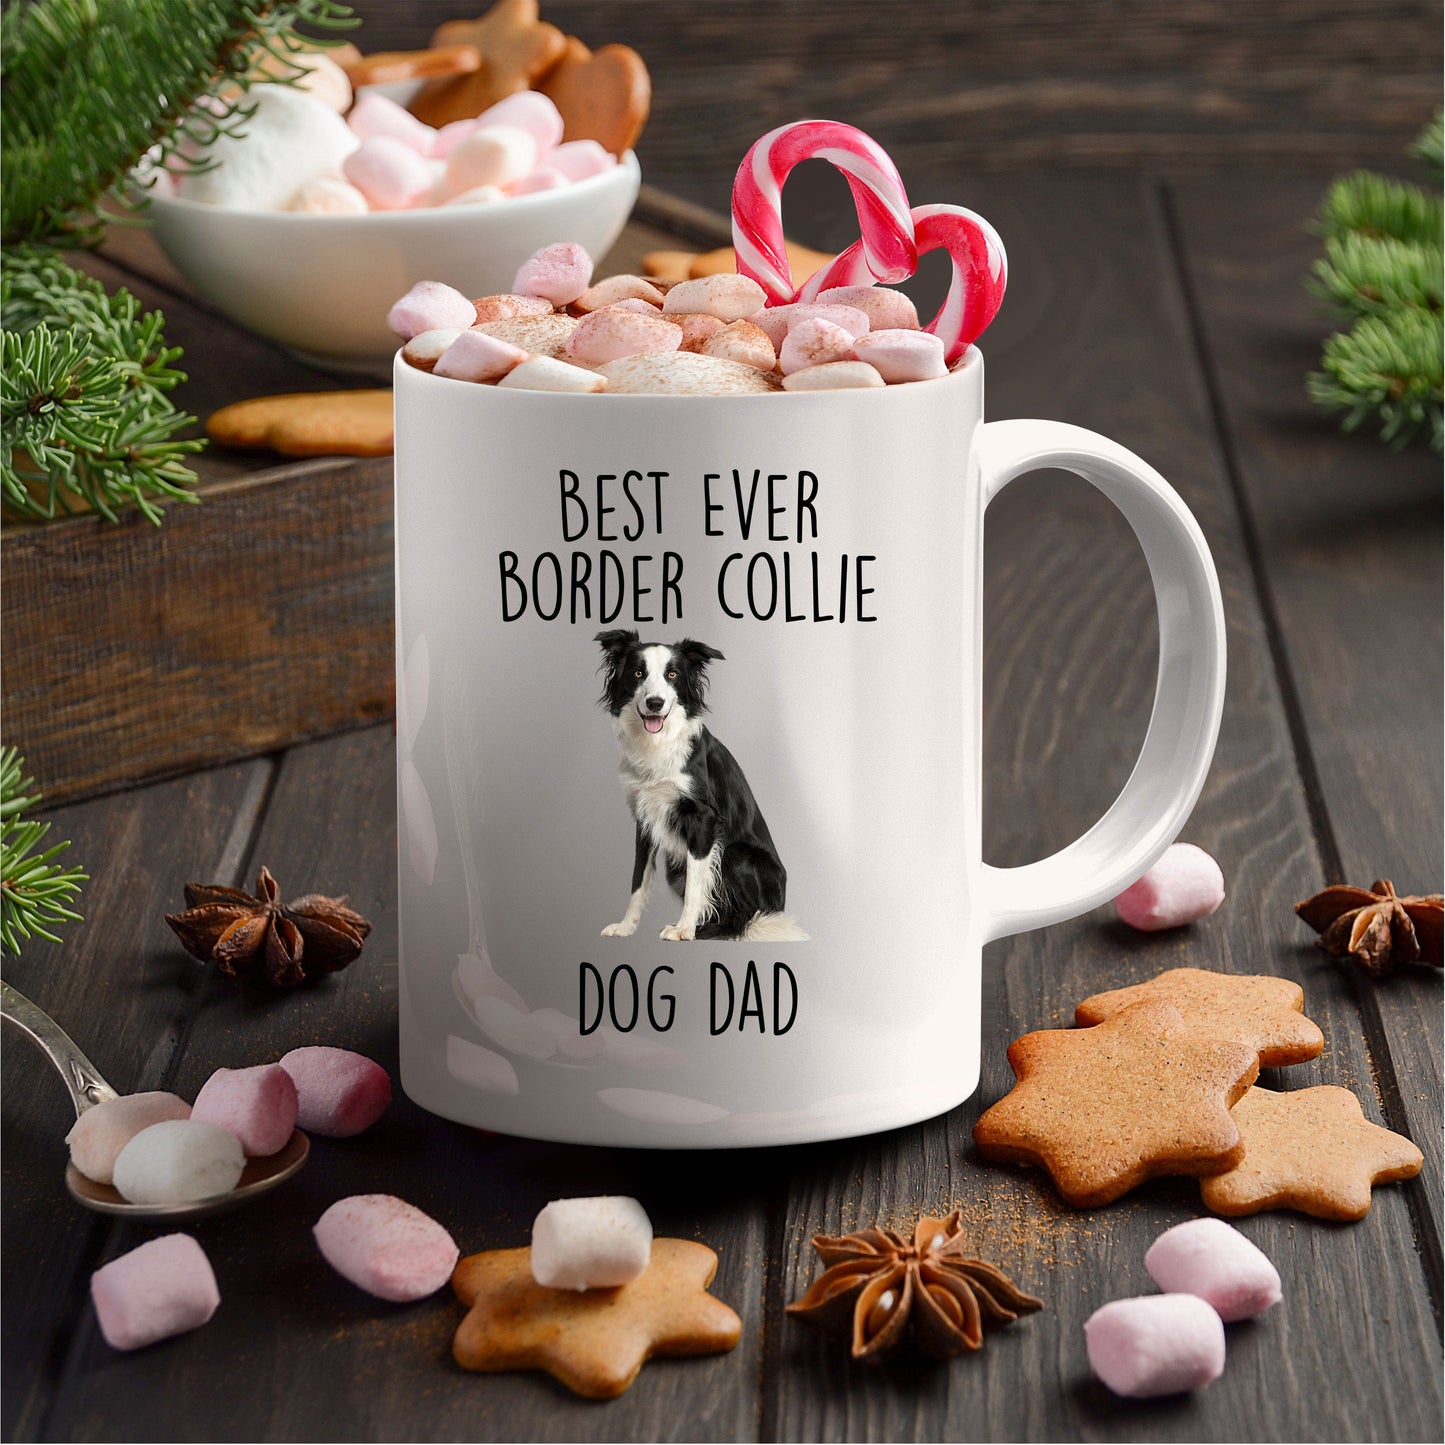 Best Ever Border Collie Dog Dad Ceramic Coffee Mug